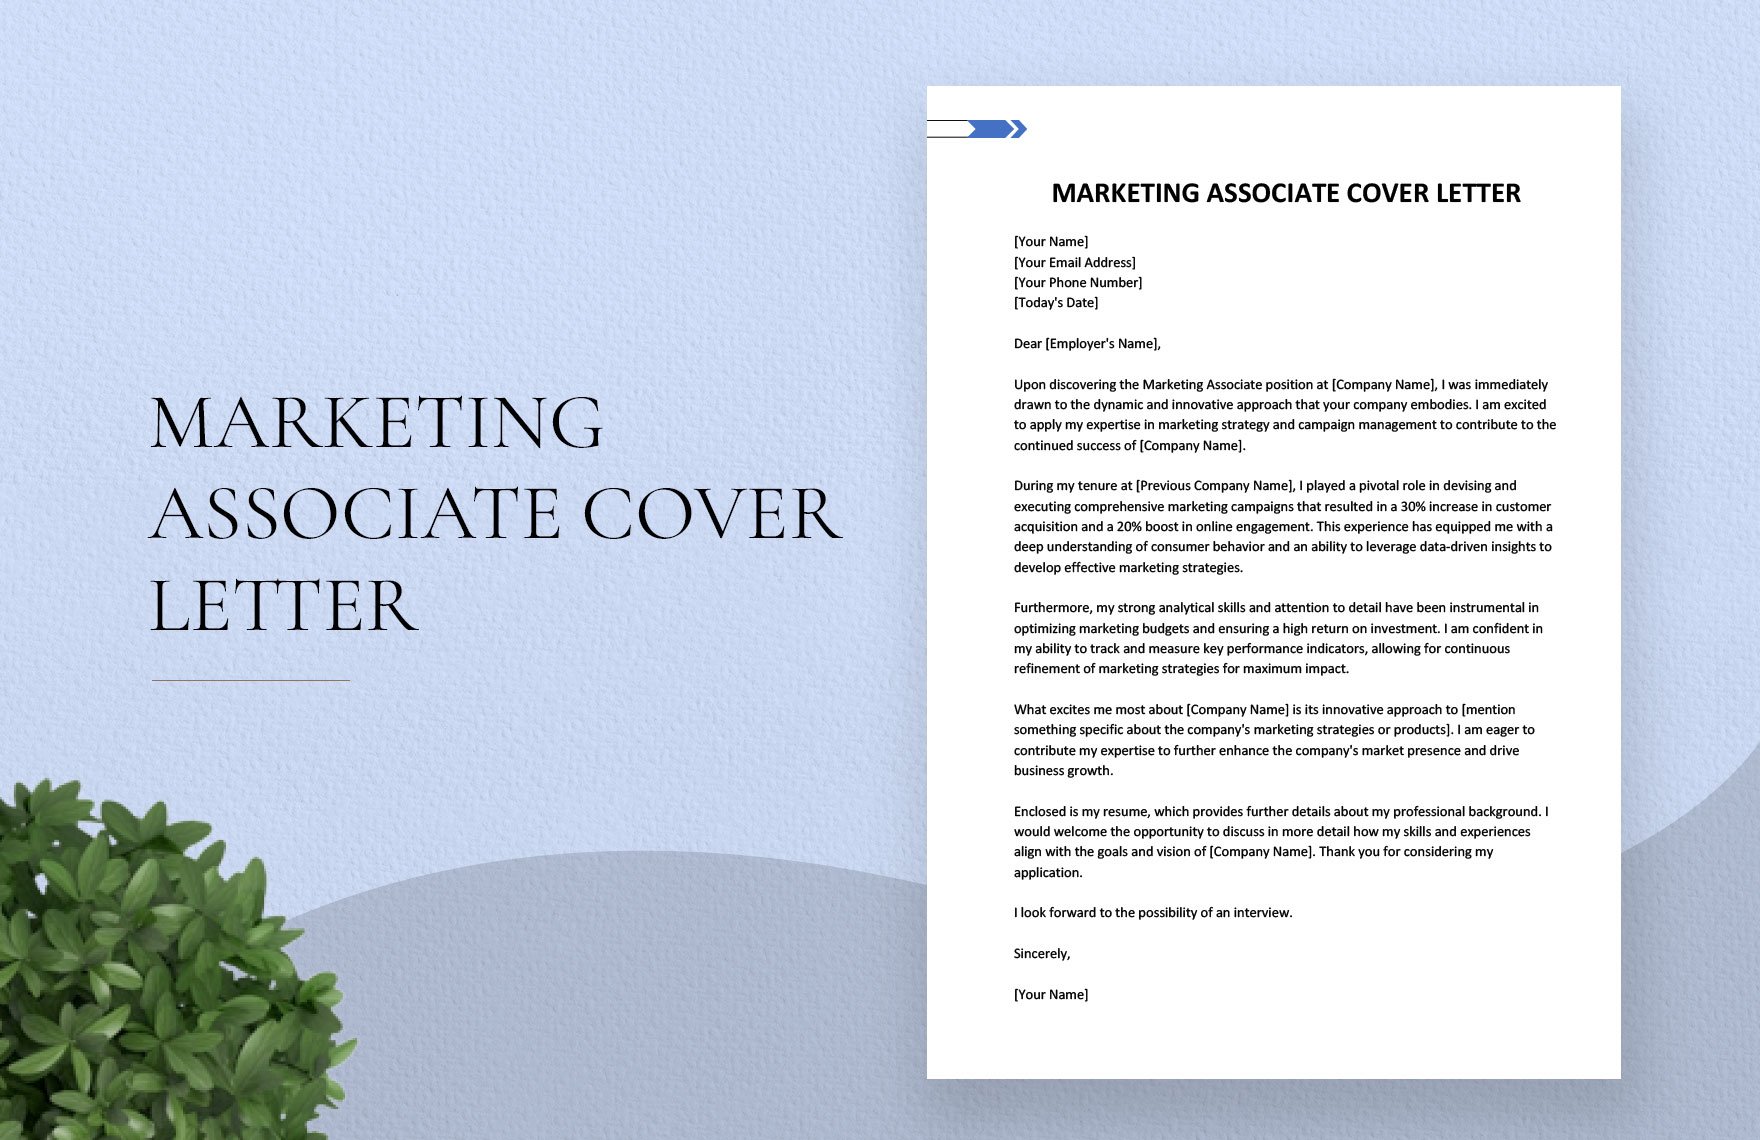 Marketing Associate Cover Letter in Word, Google Docs